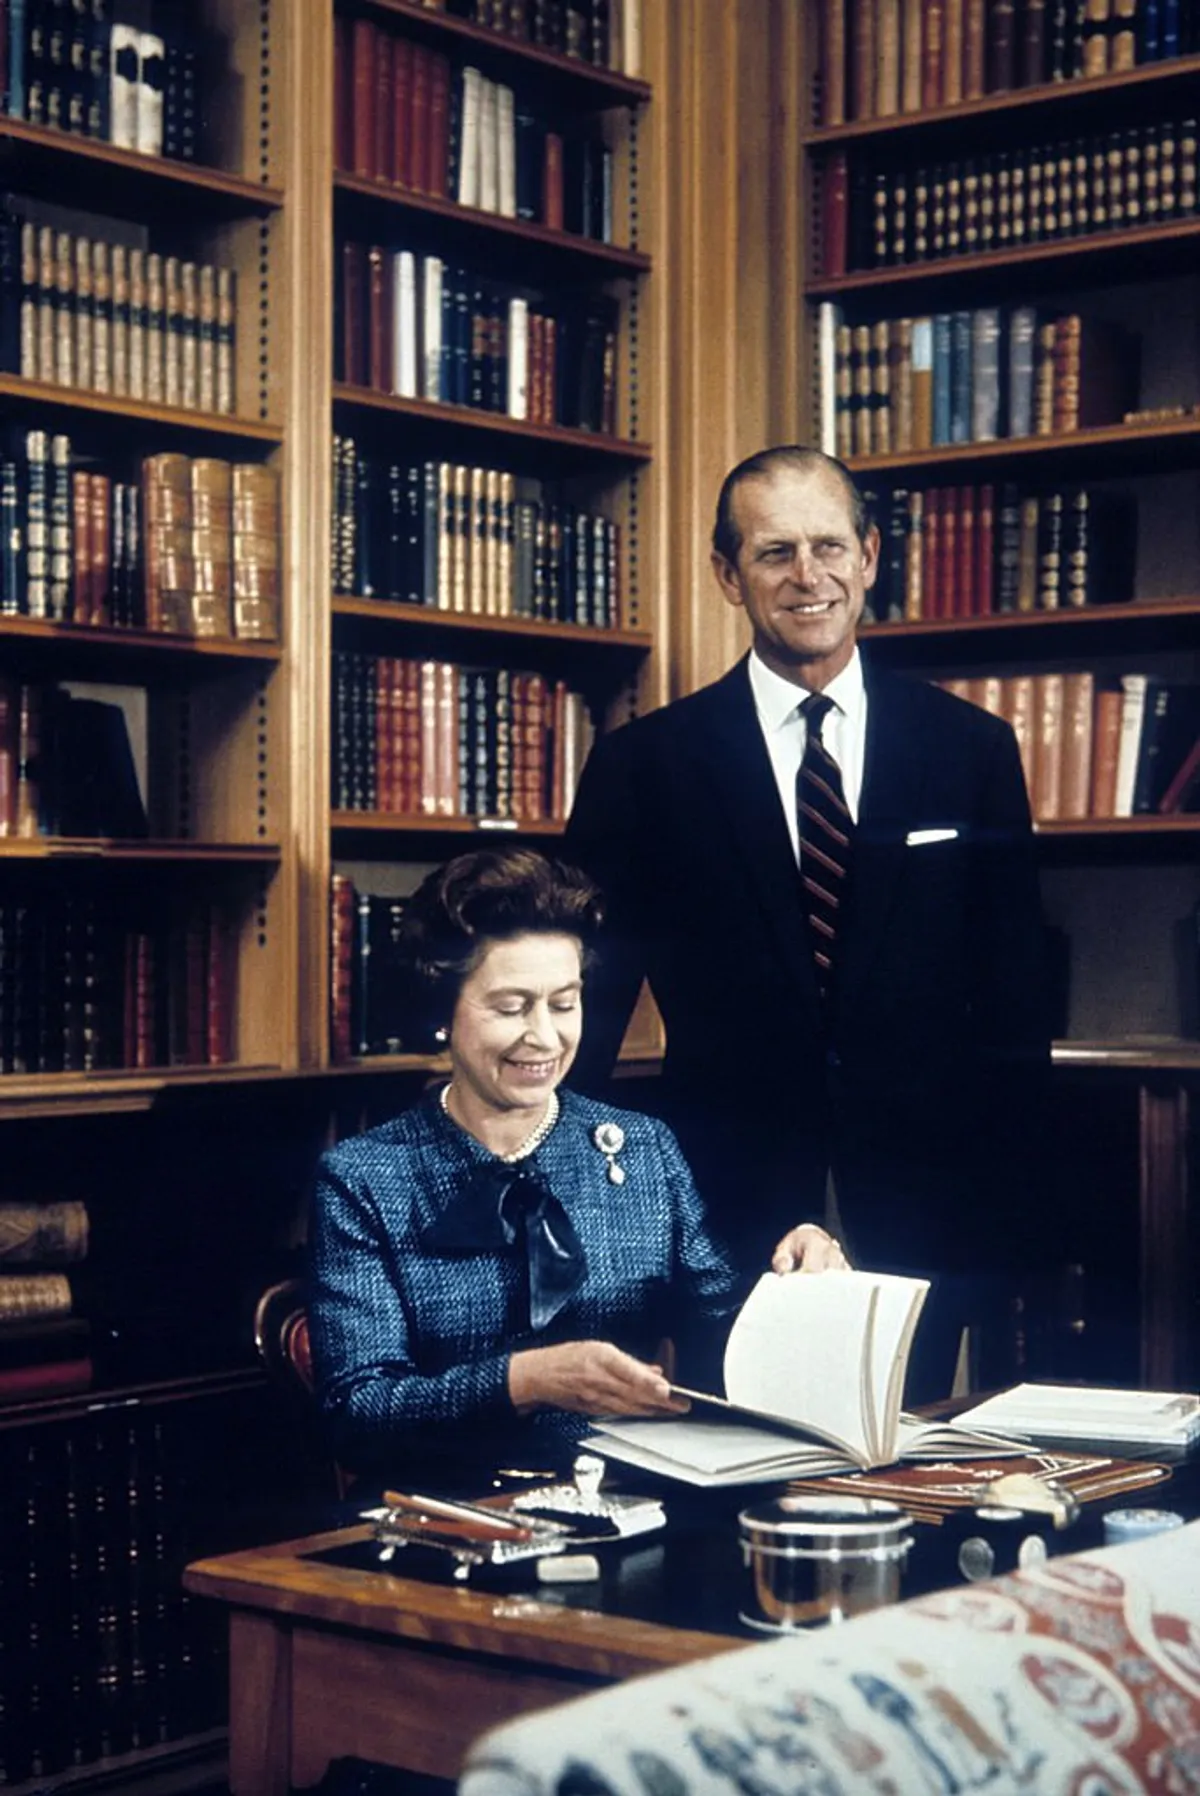 Prince Philip et la reine Elizabeth II. I Image : Getty Images